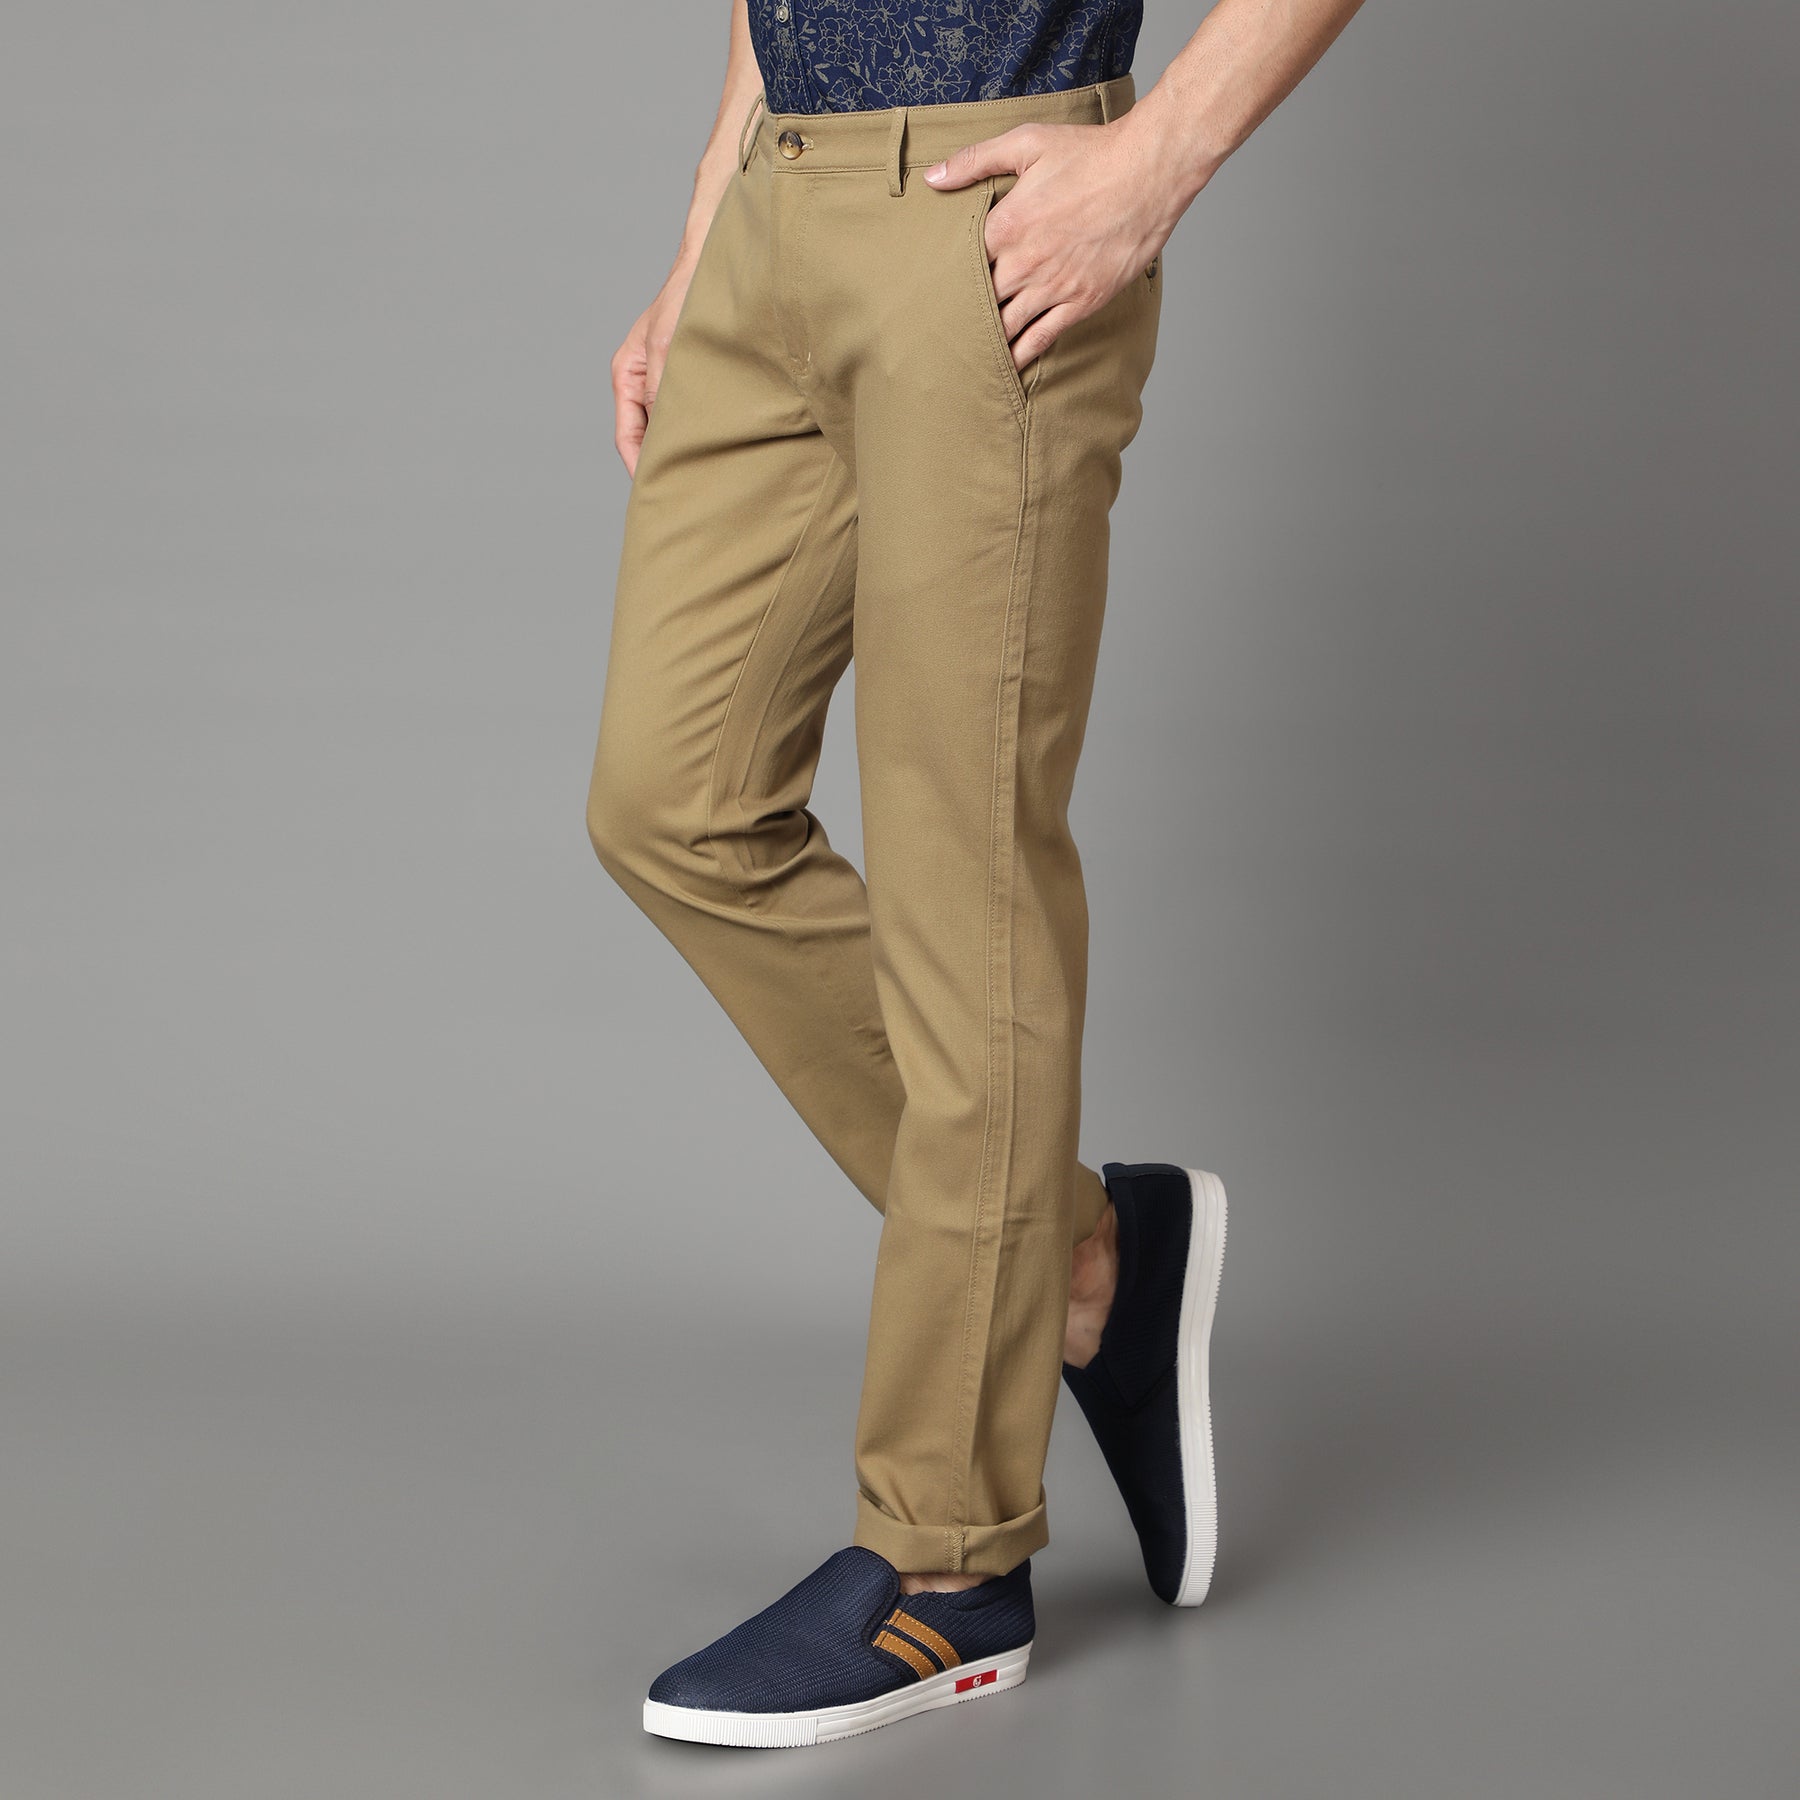 Callino London Official Online Store | Exclusive Men's Wear